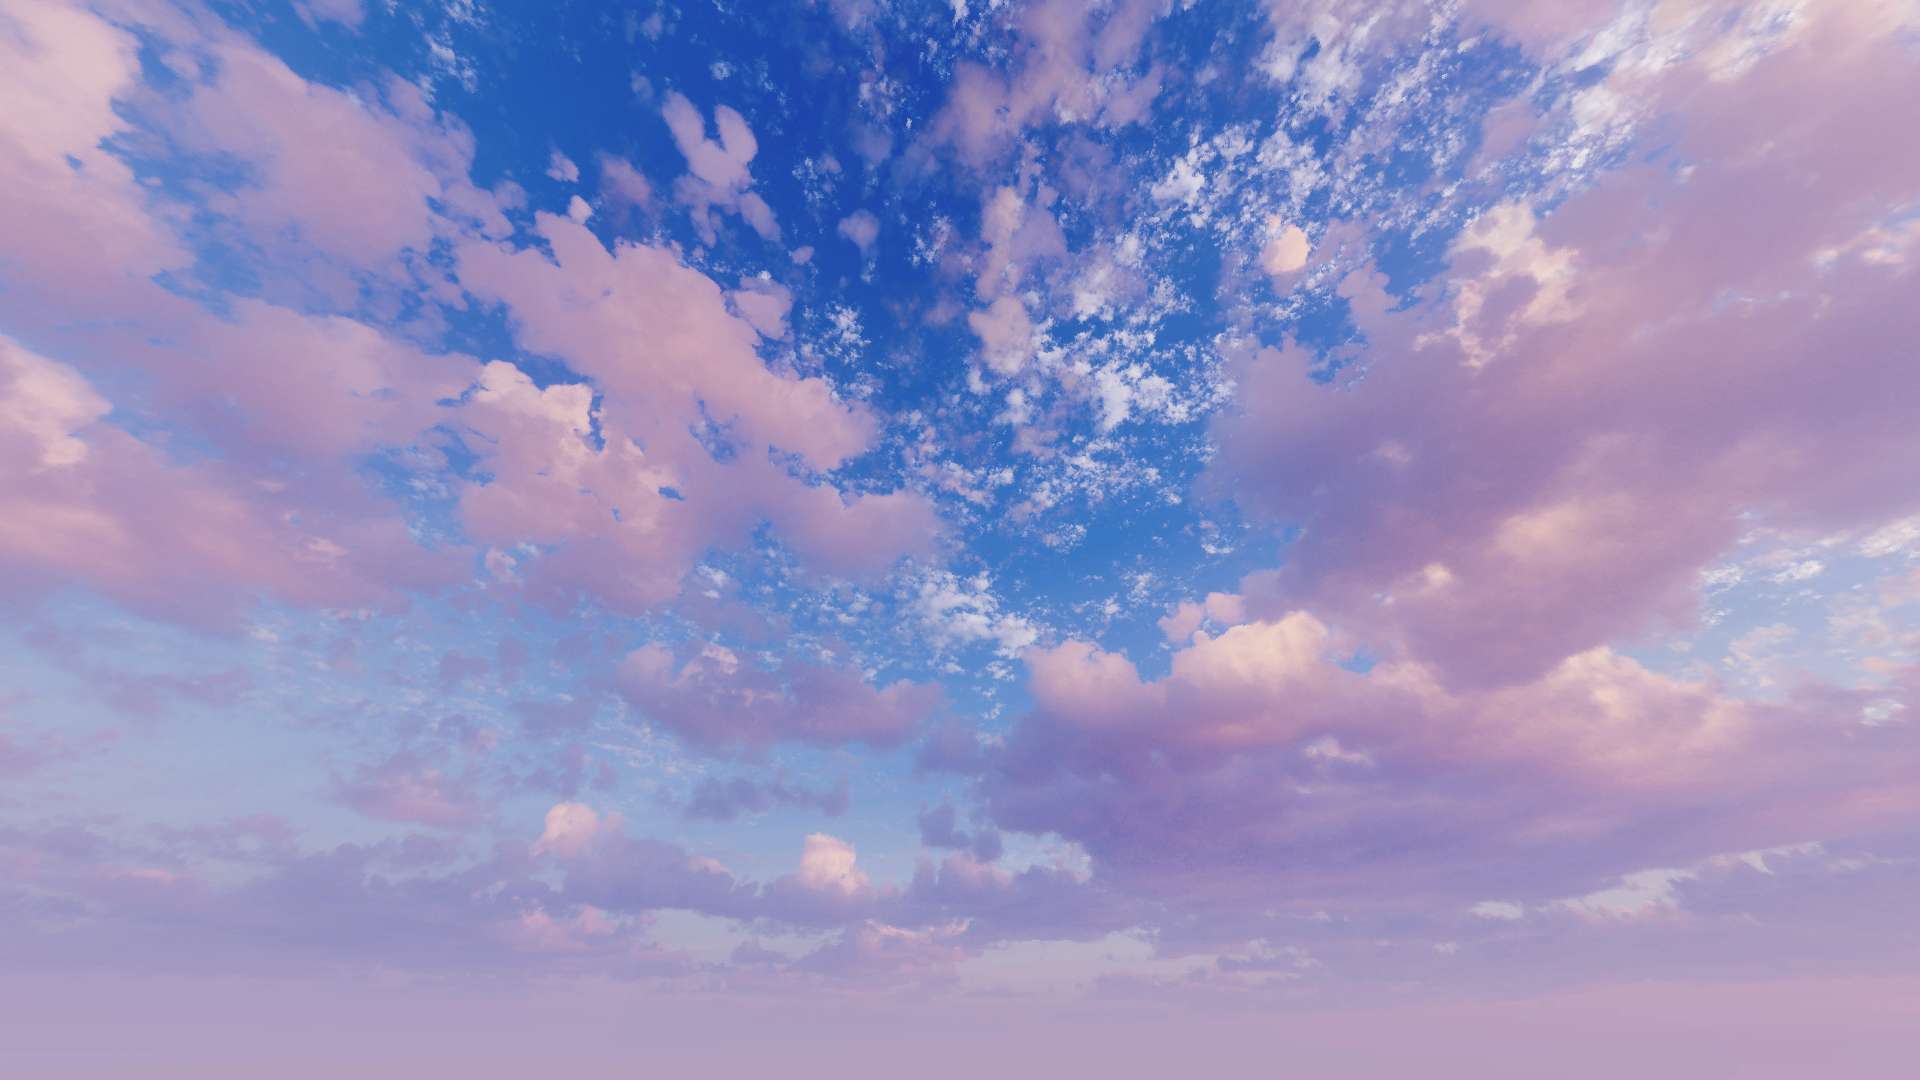 Aesthetic Pink Sky 16x by Yuruze on PvPRP